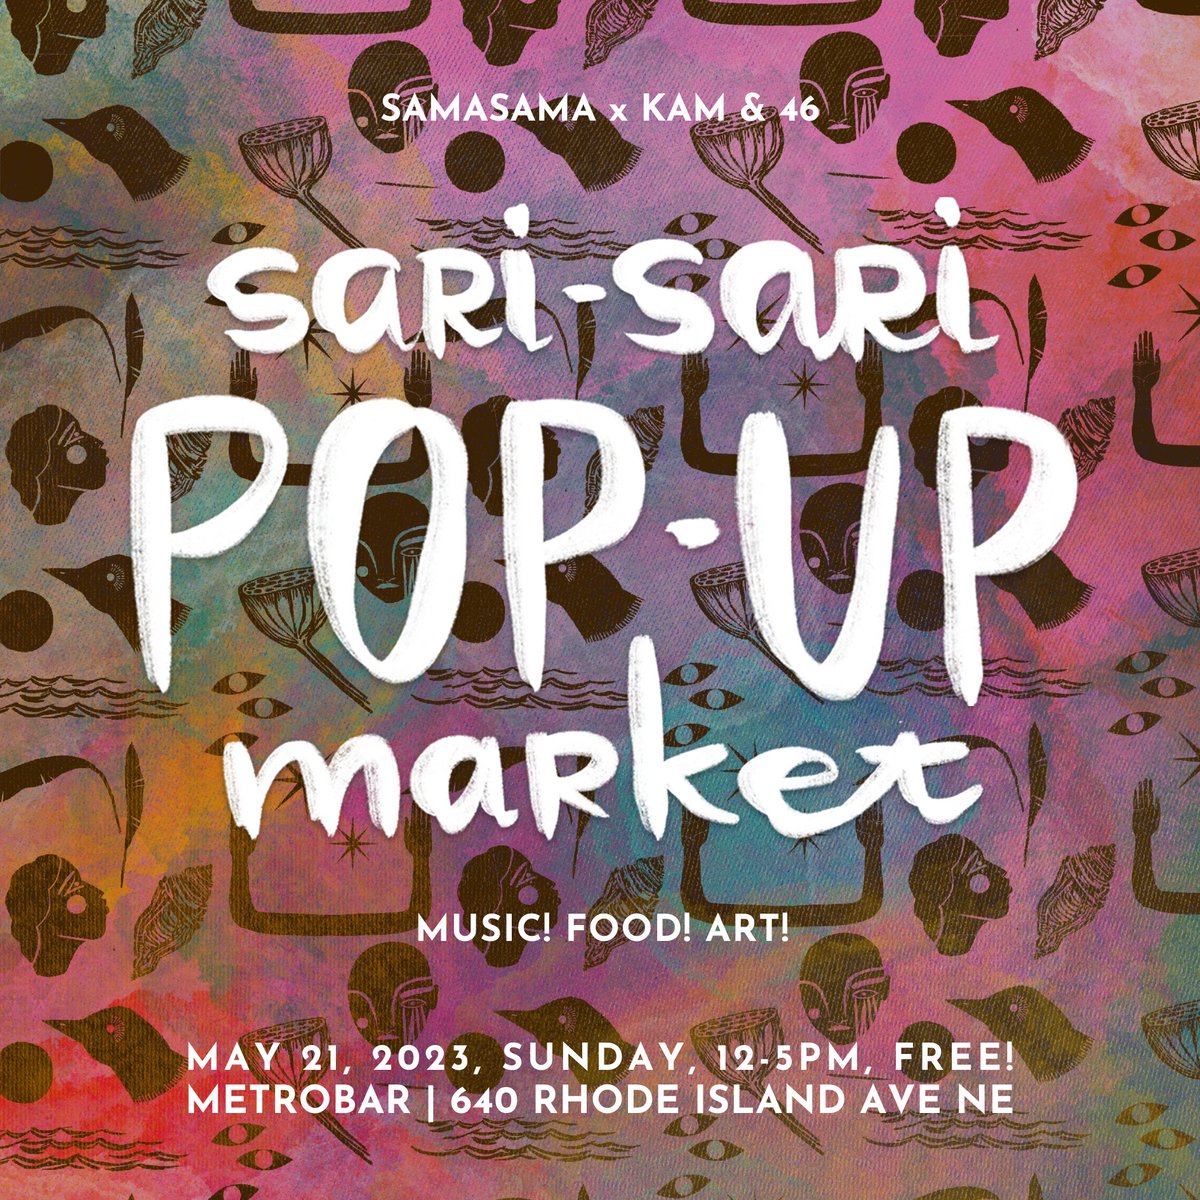 This SUNDAY from 12-5PM @metrobardc 
'Sari Pop-Up Market'
Join Kam & 46 and SAMASAMA for food, drinks, music, and shopping. #weekend #WashingtonDC #popupmarket #sarisari